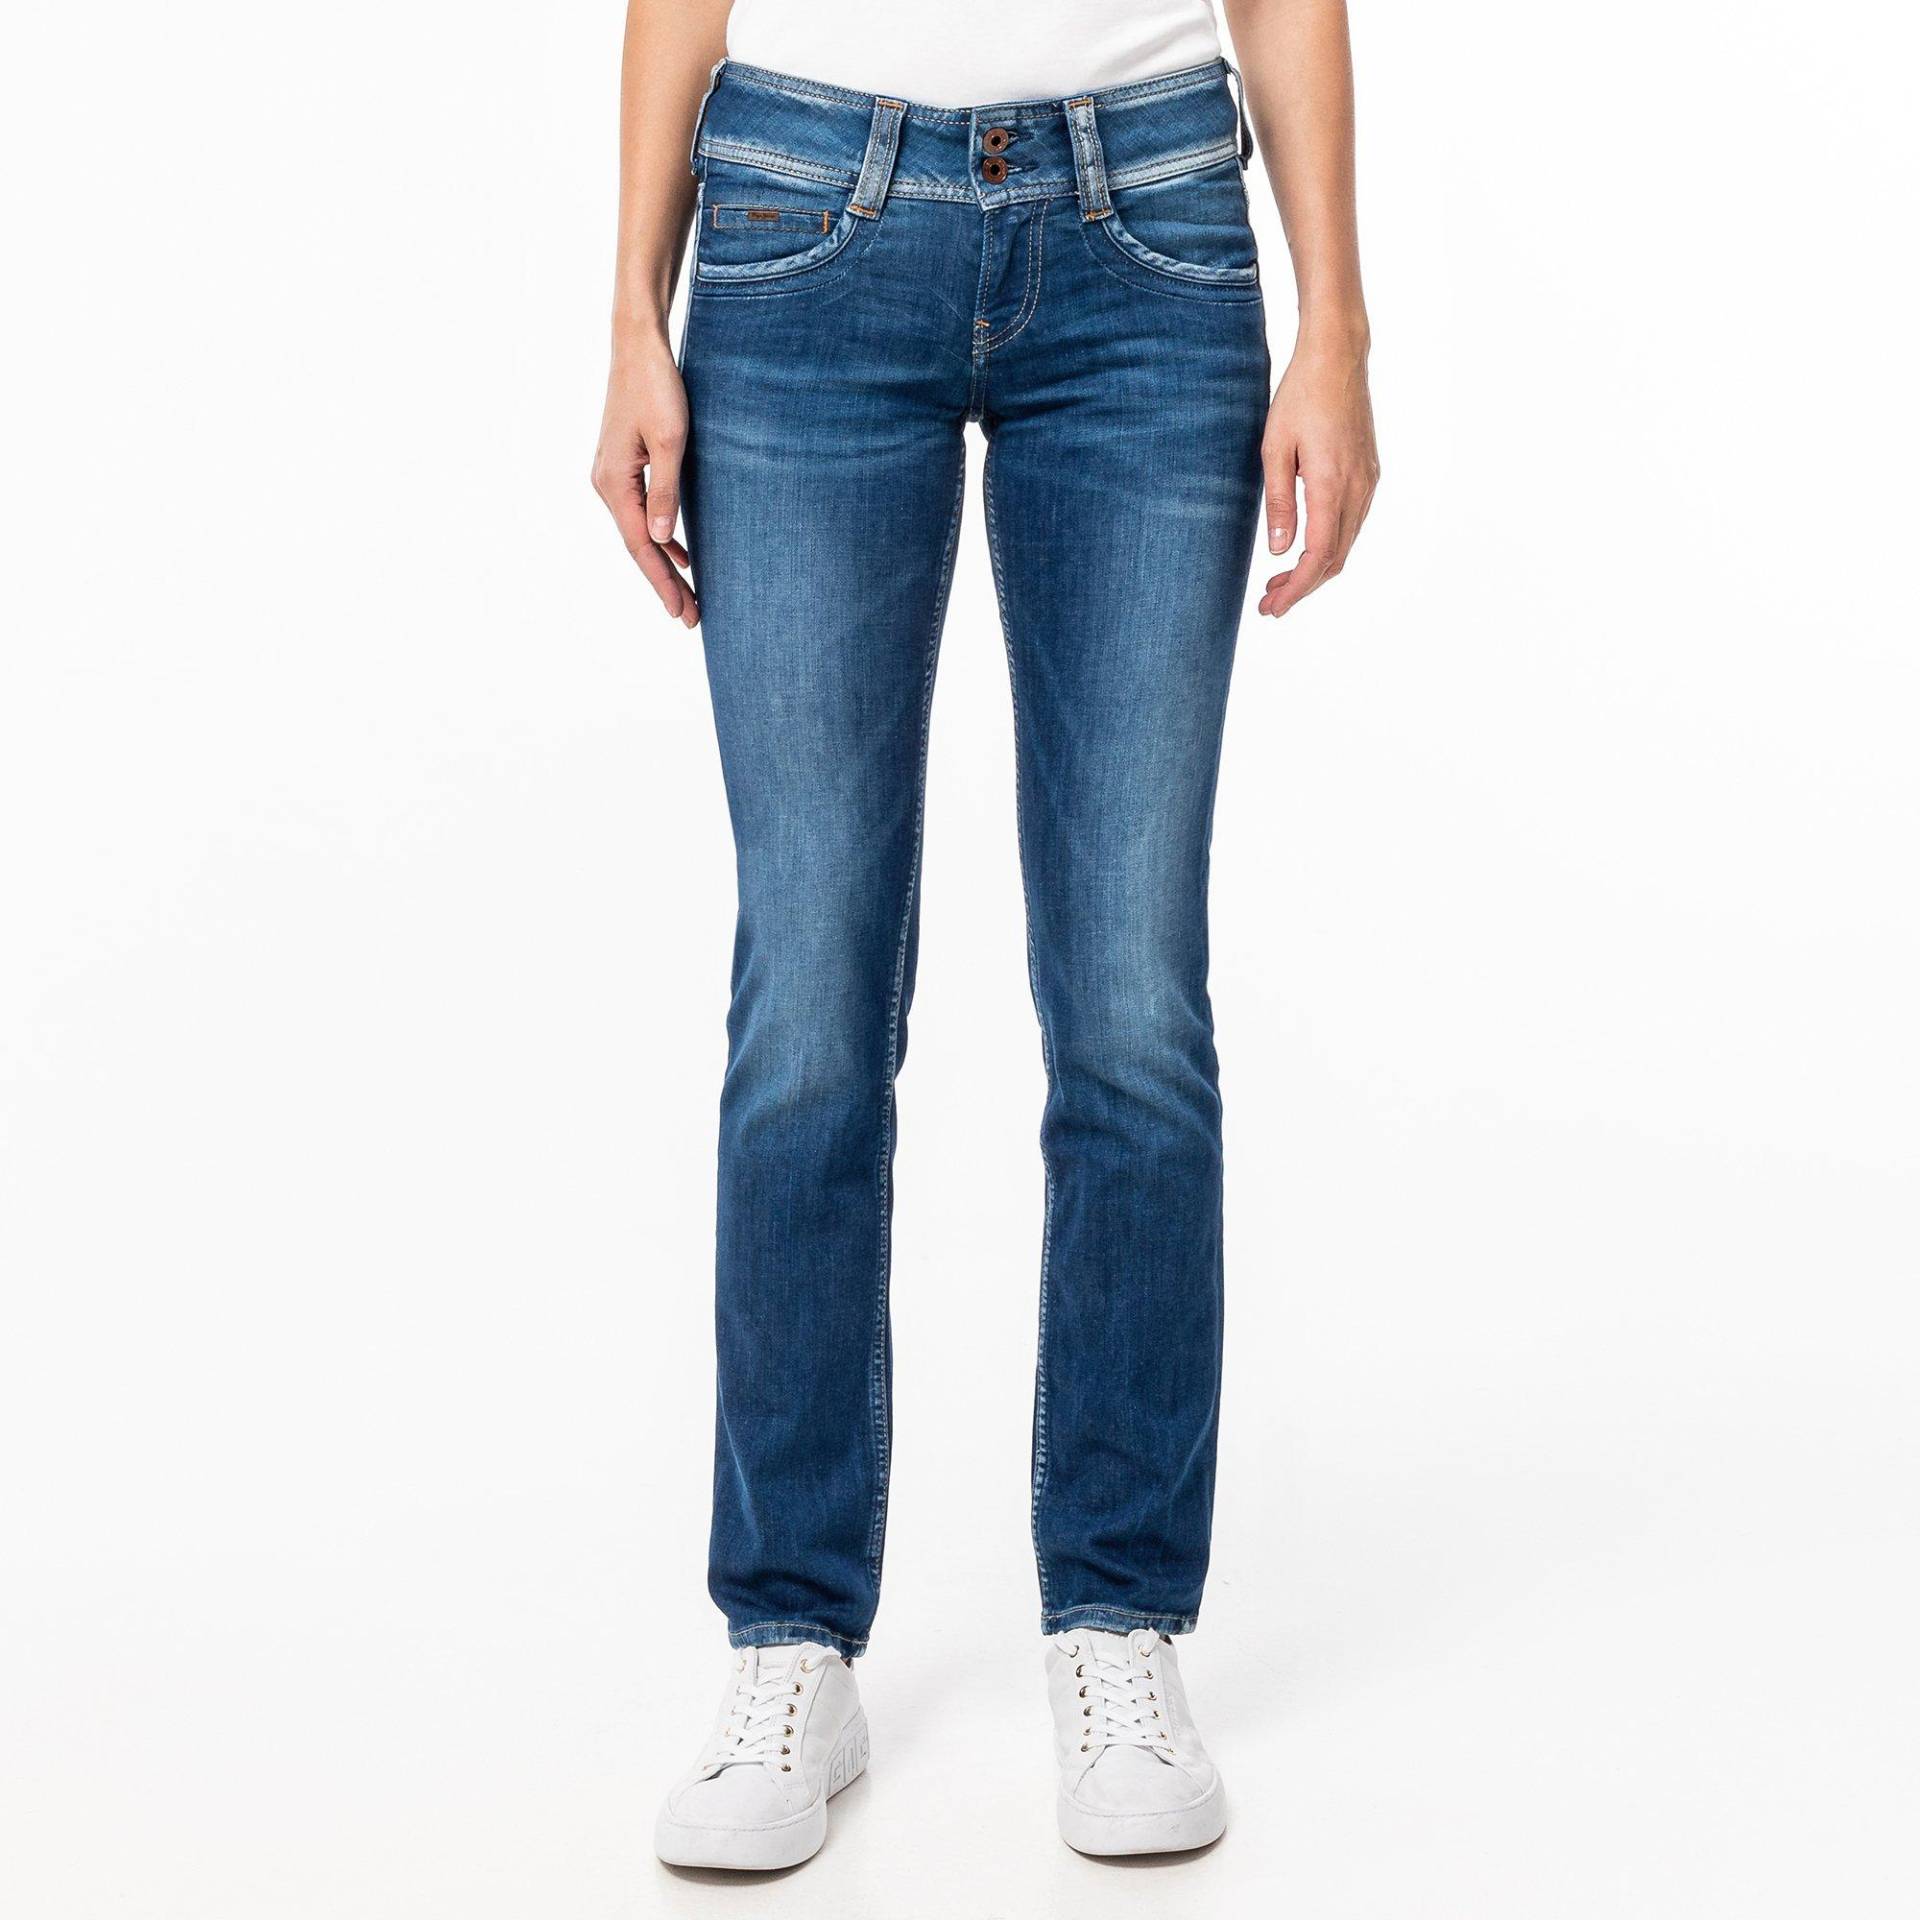 Jeans, Straight Leg Fit Damen Blau Denim Dunkel W30 von Pepe Jeans